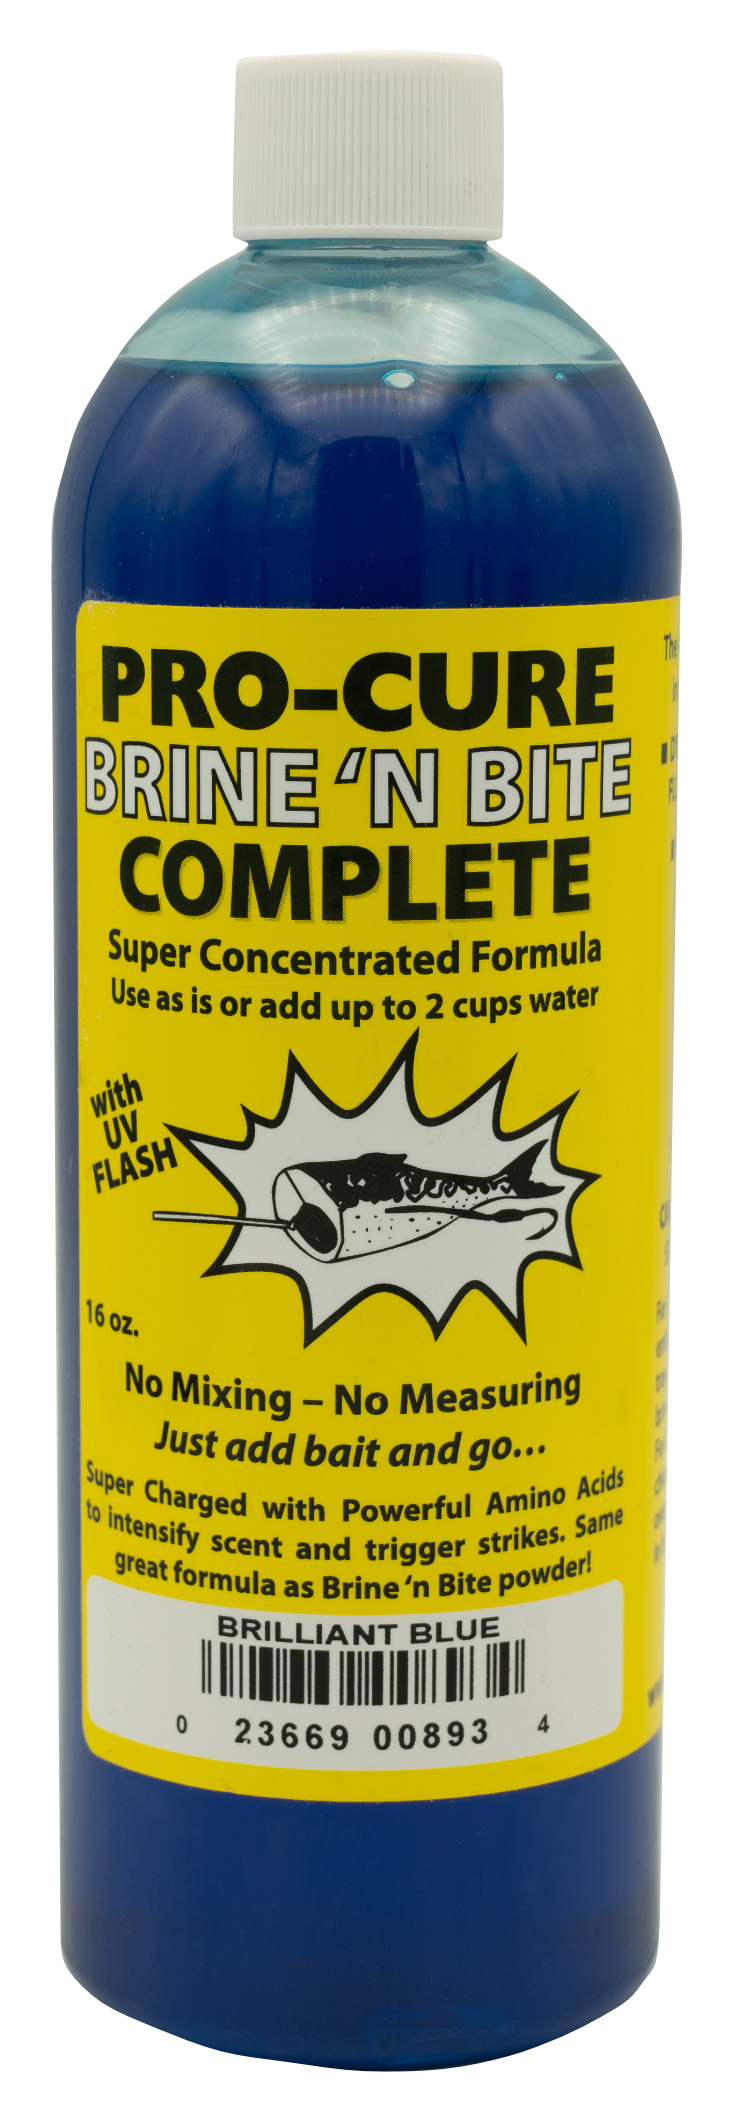 Pro-Cure Brine 'n Bite Complete, 16 oz, Blue